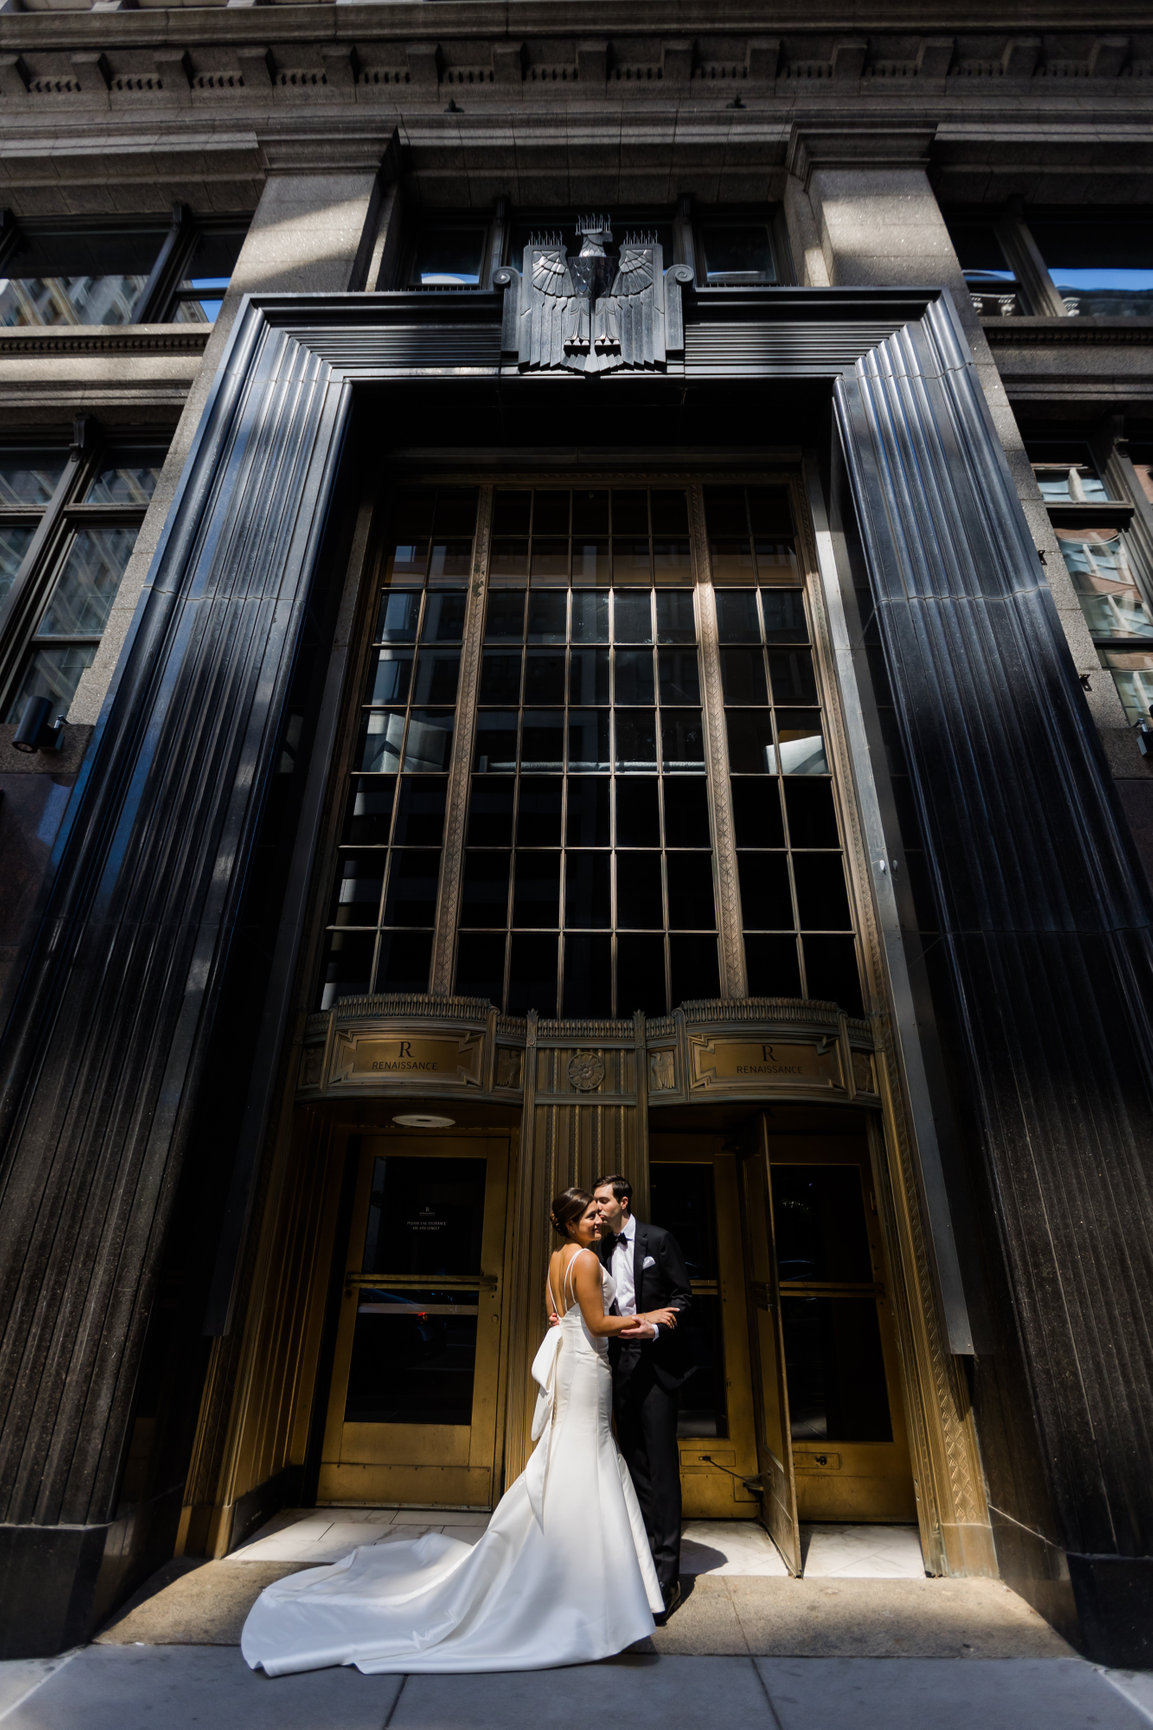 Michelle & Brendan's Wedding - WeefanPhotography